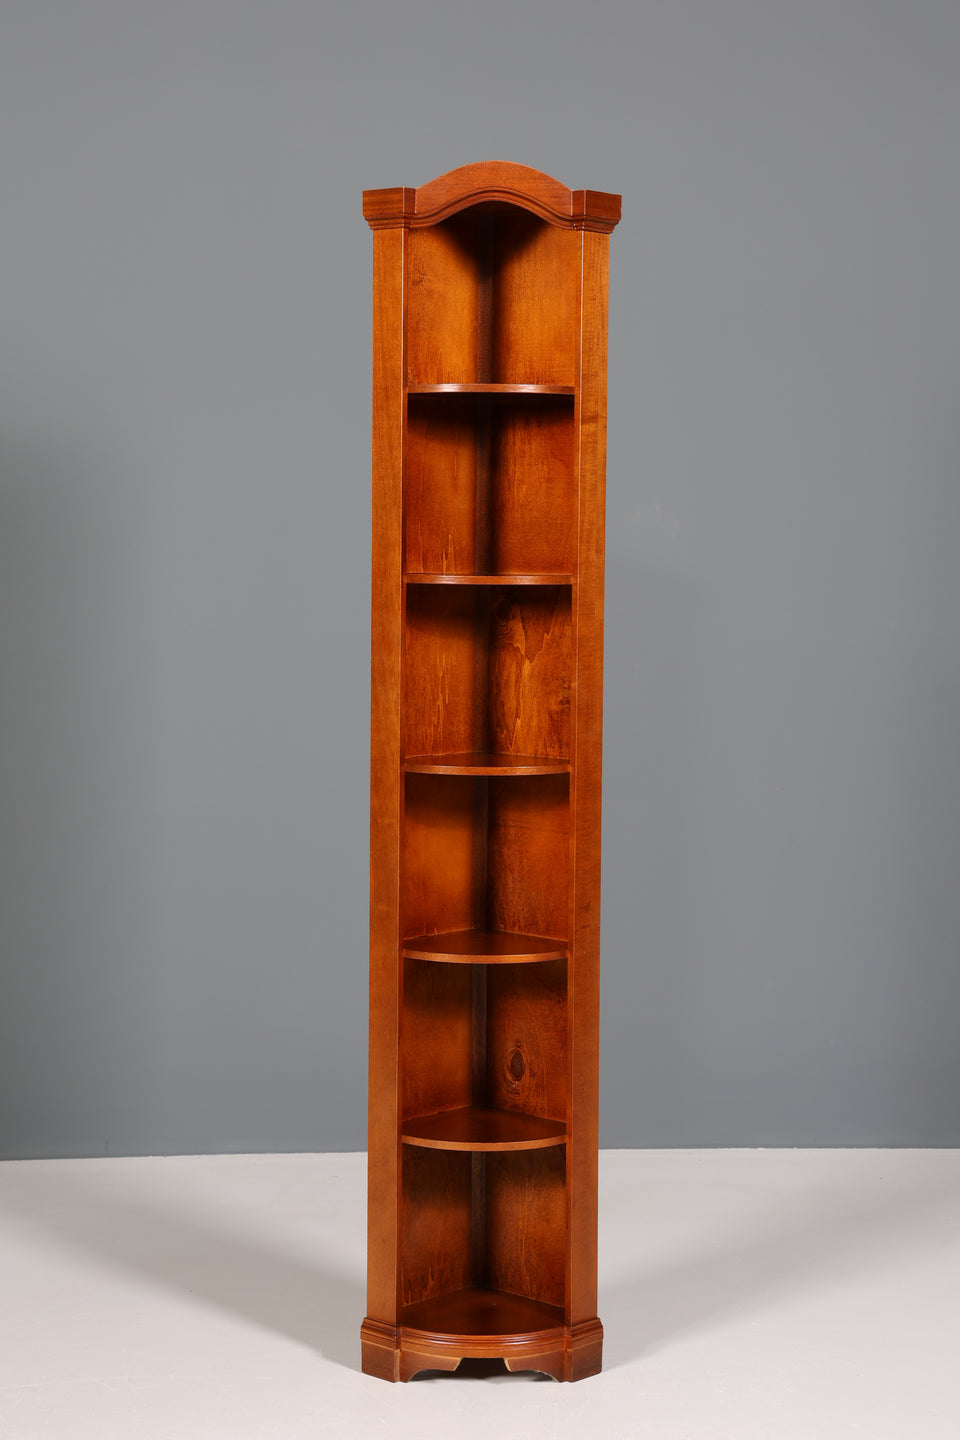 Wunderschönes Eckregal Antik Stil Bücherregal echt Holz Regal Bookshelf